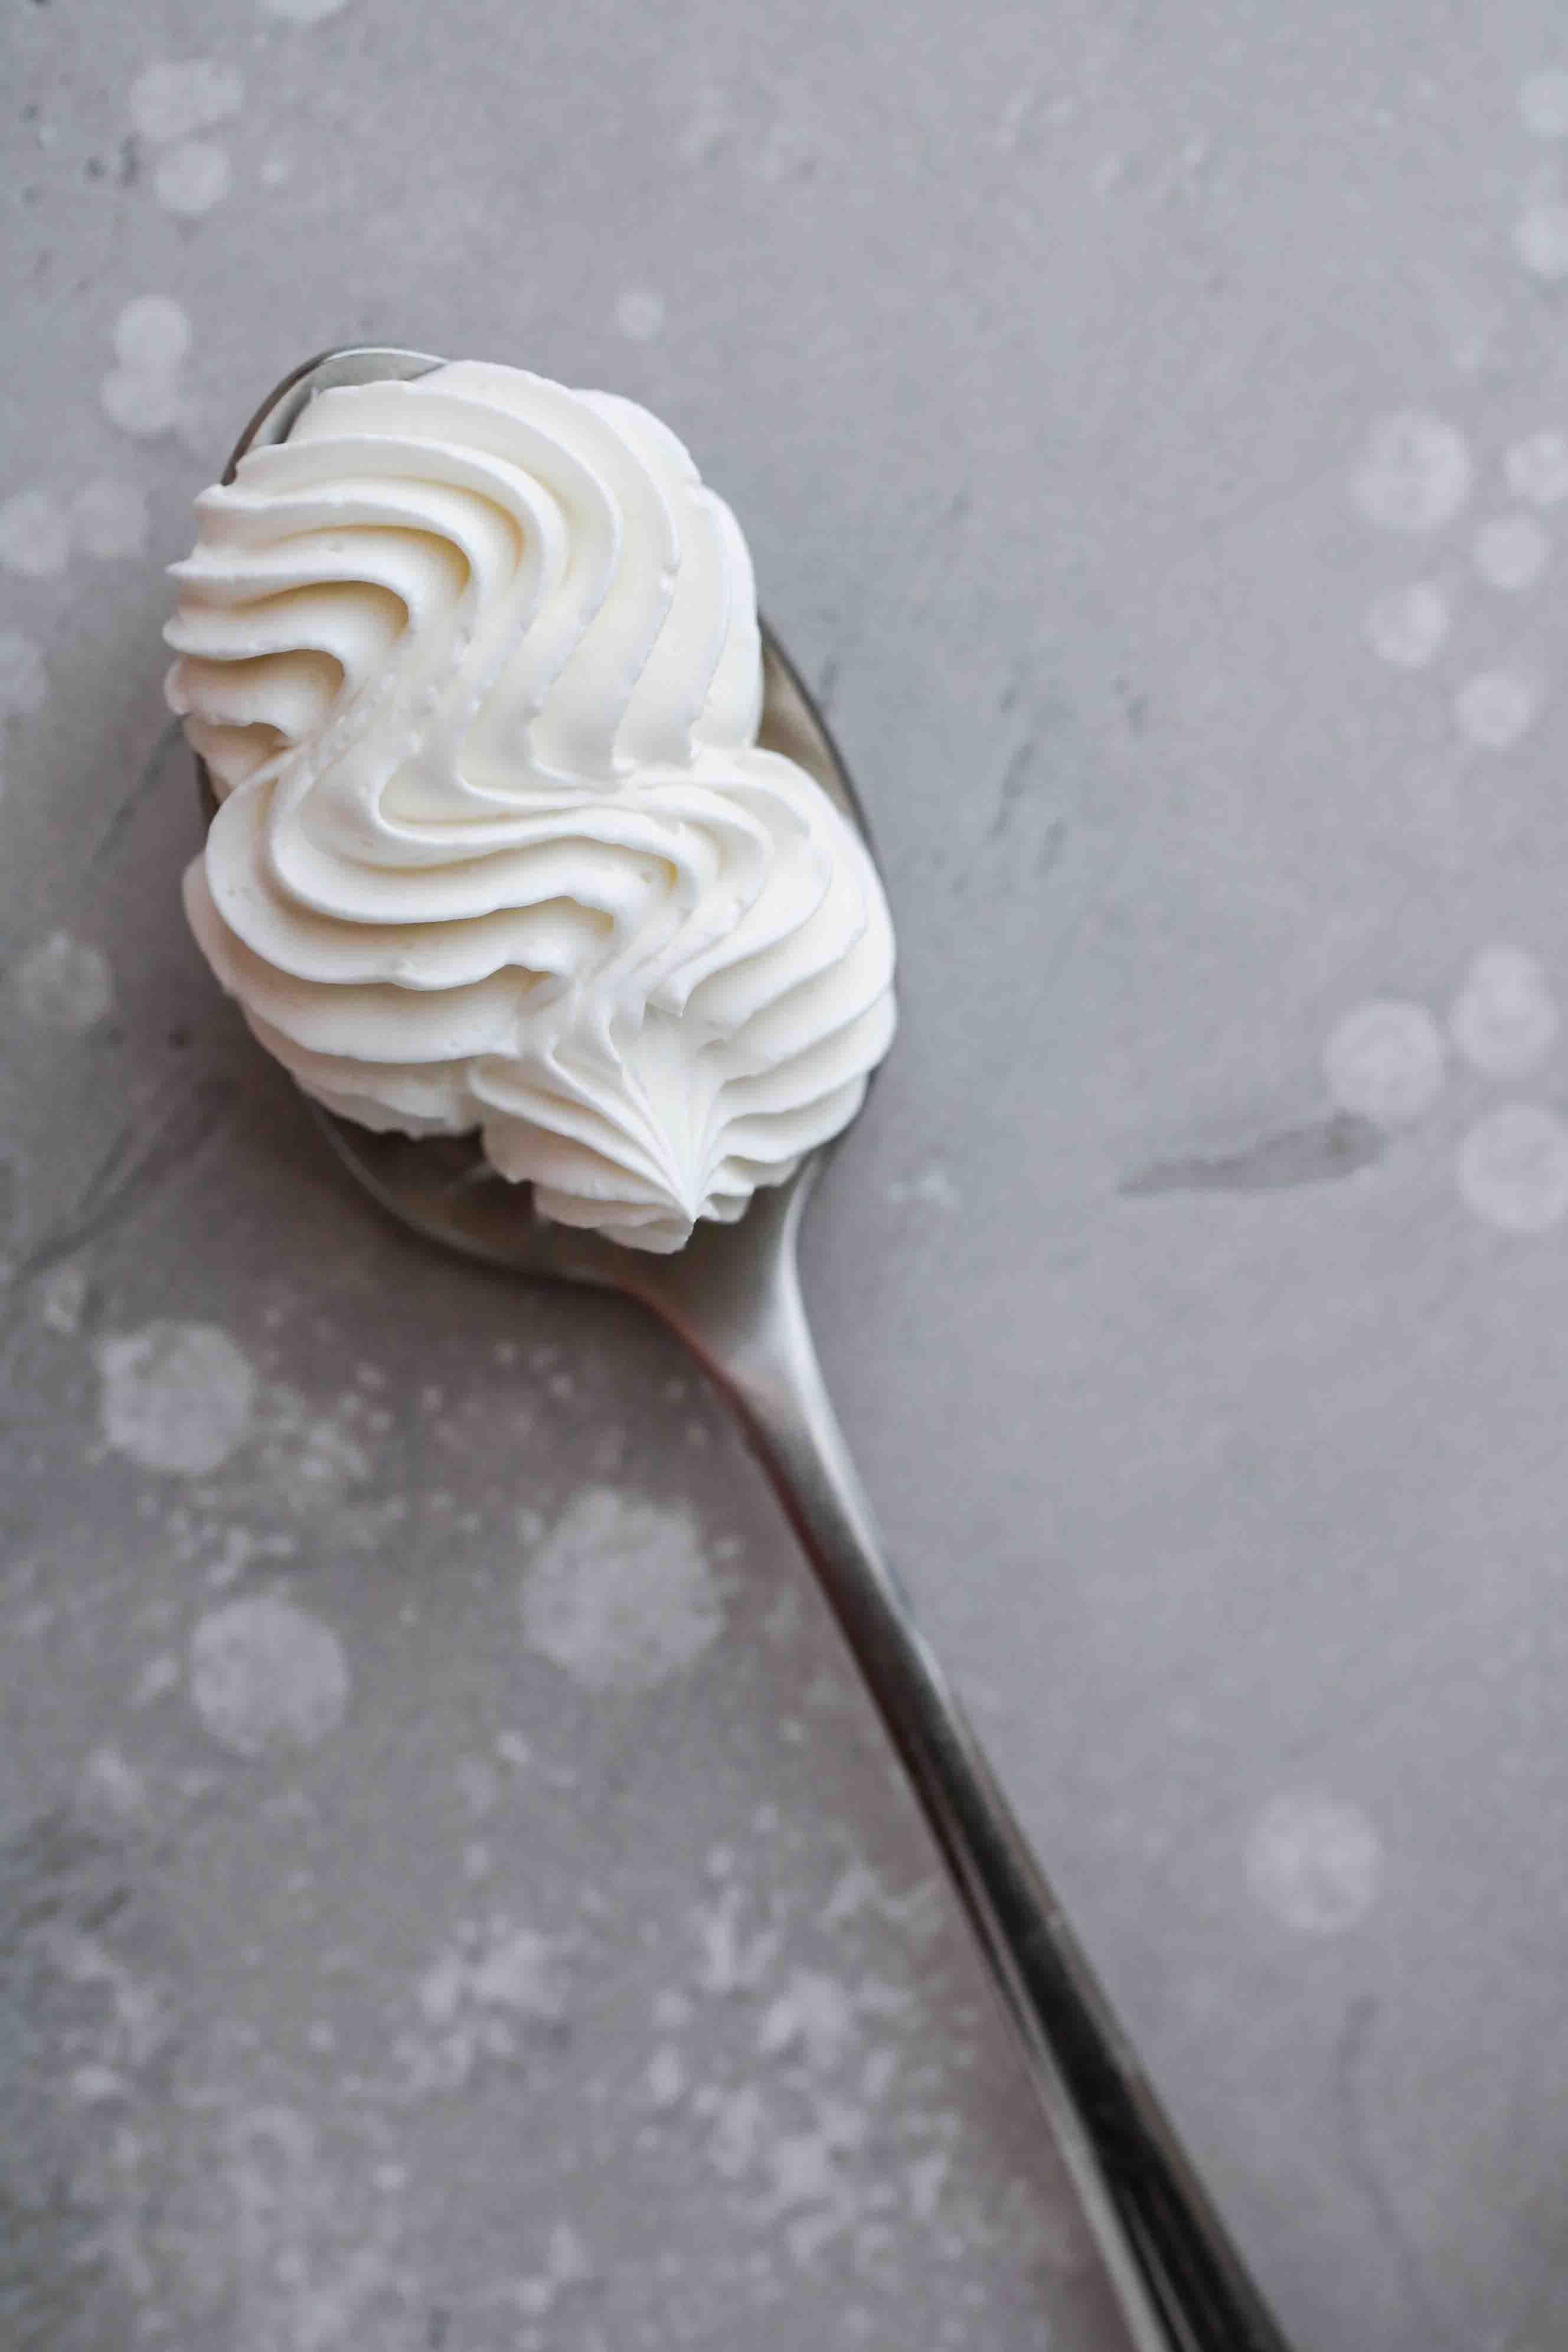 Piped Swiss meringue buttercream